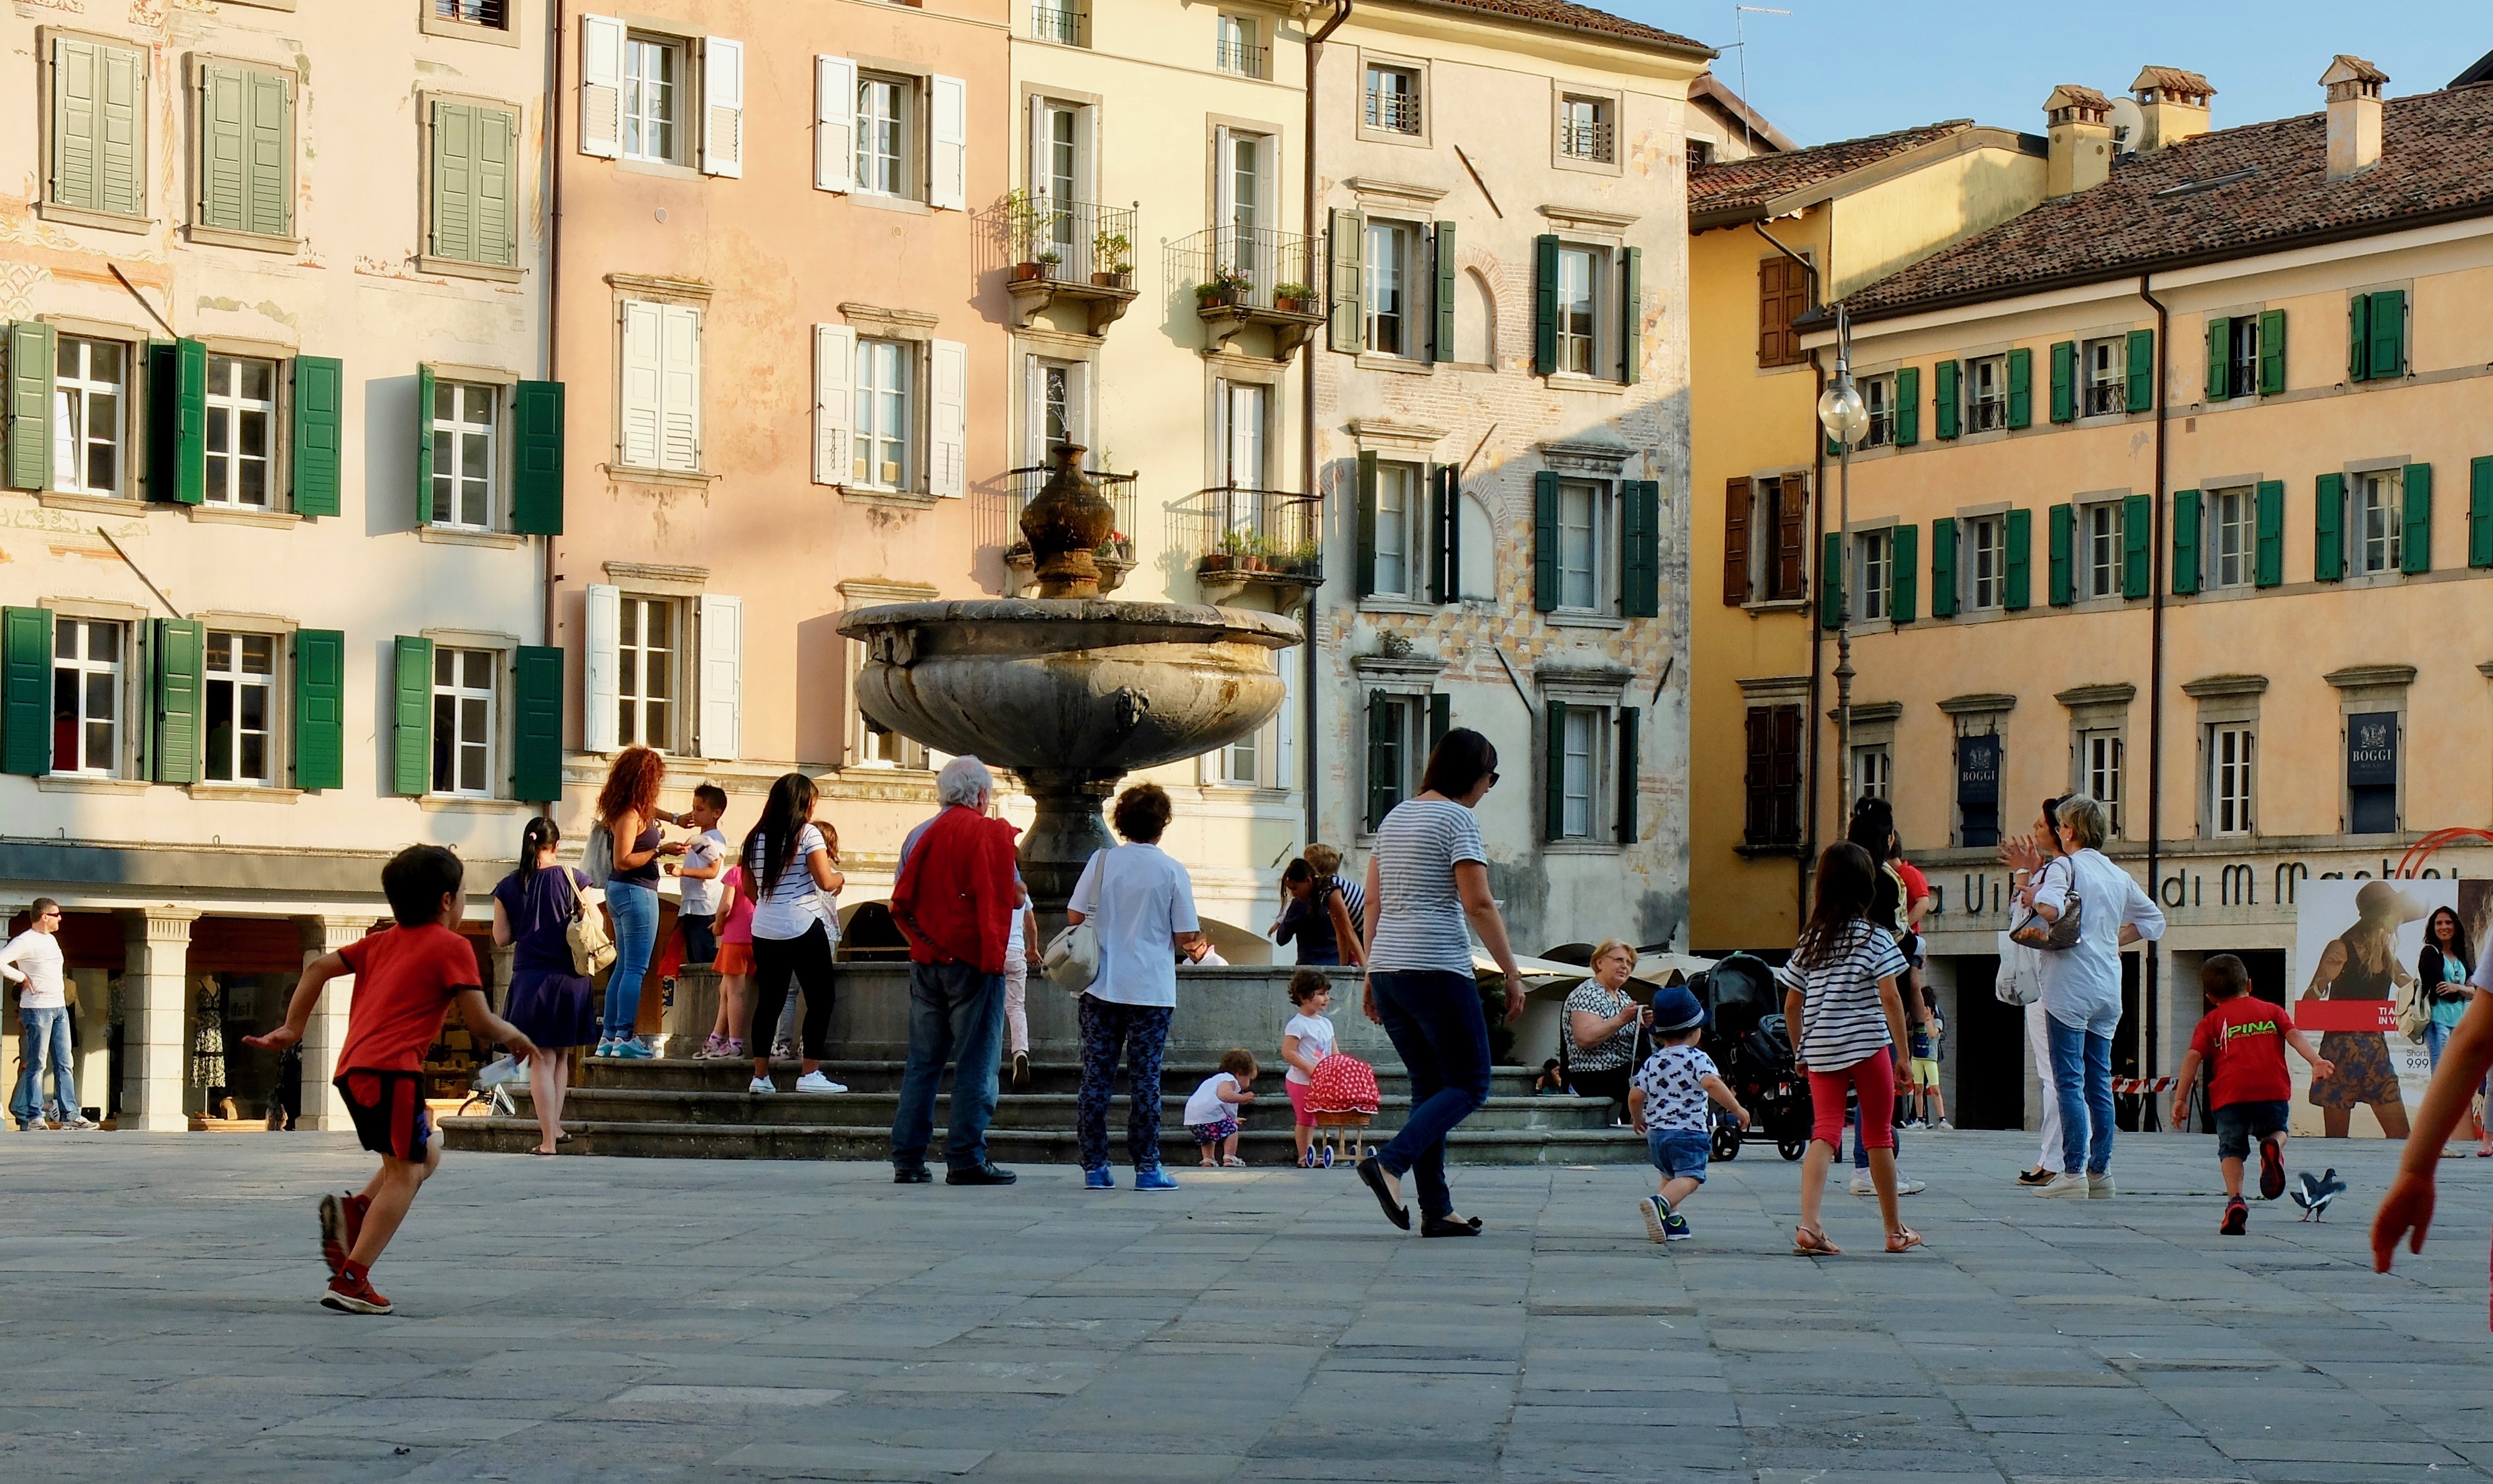 Italian life on the piazza